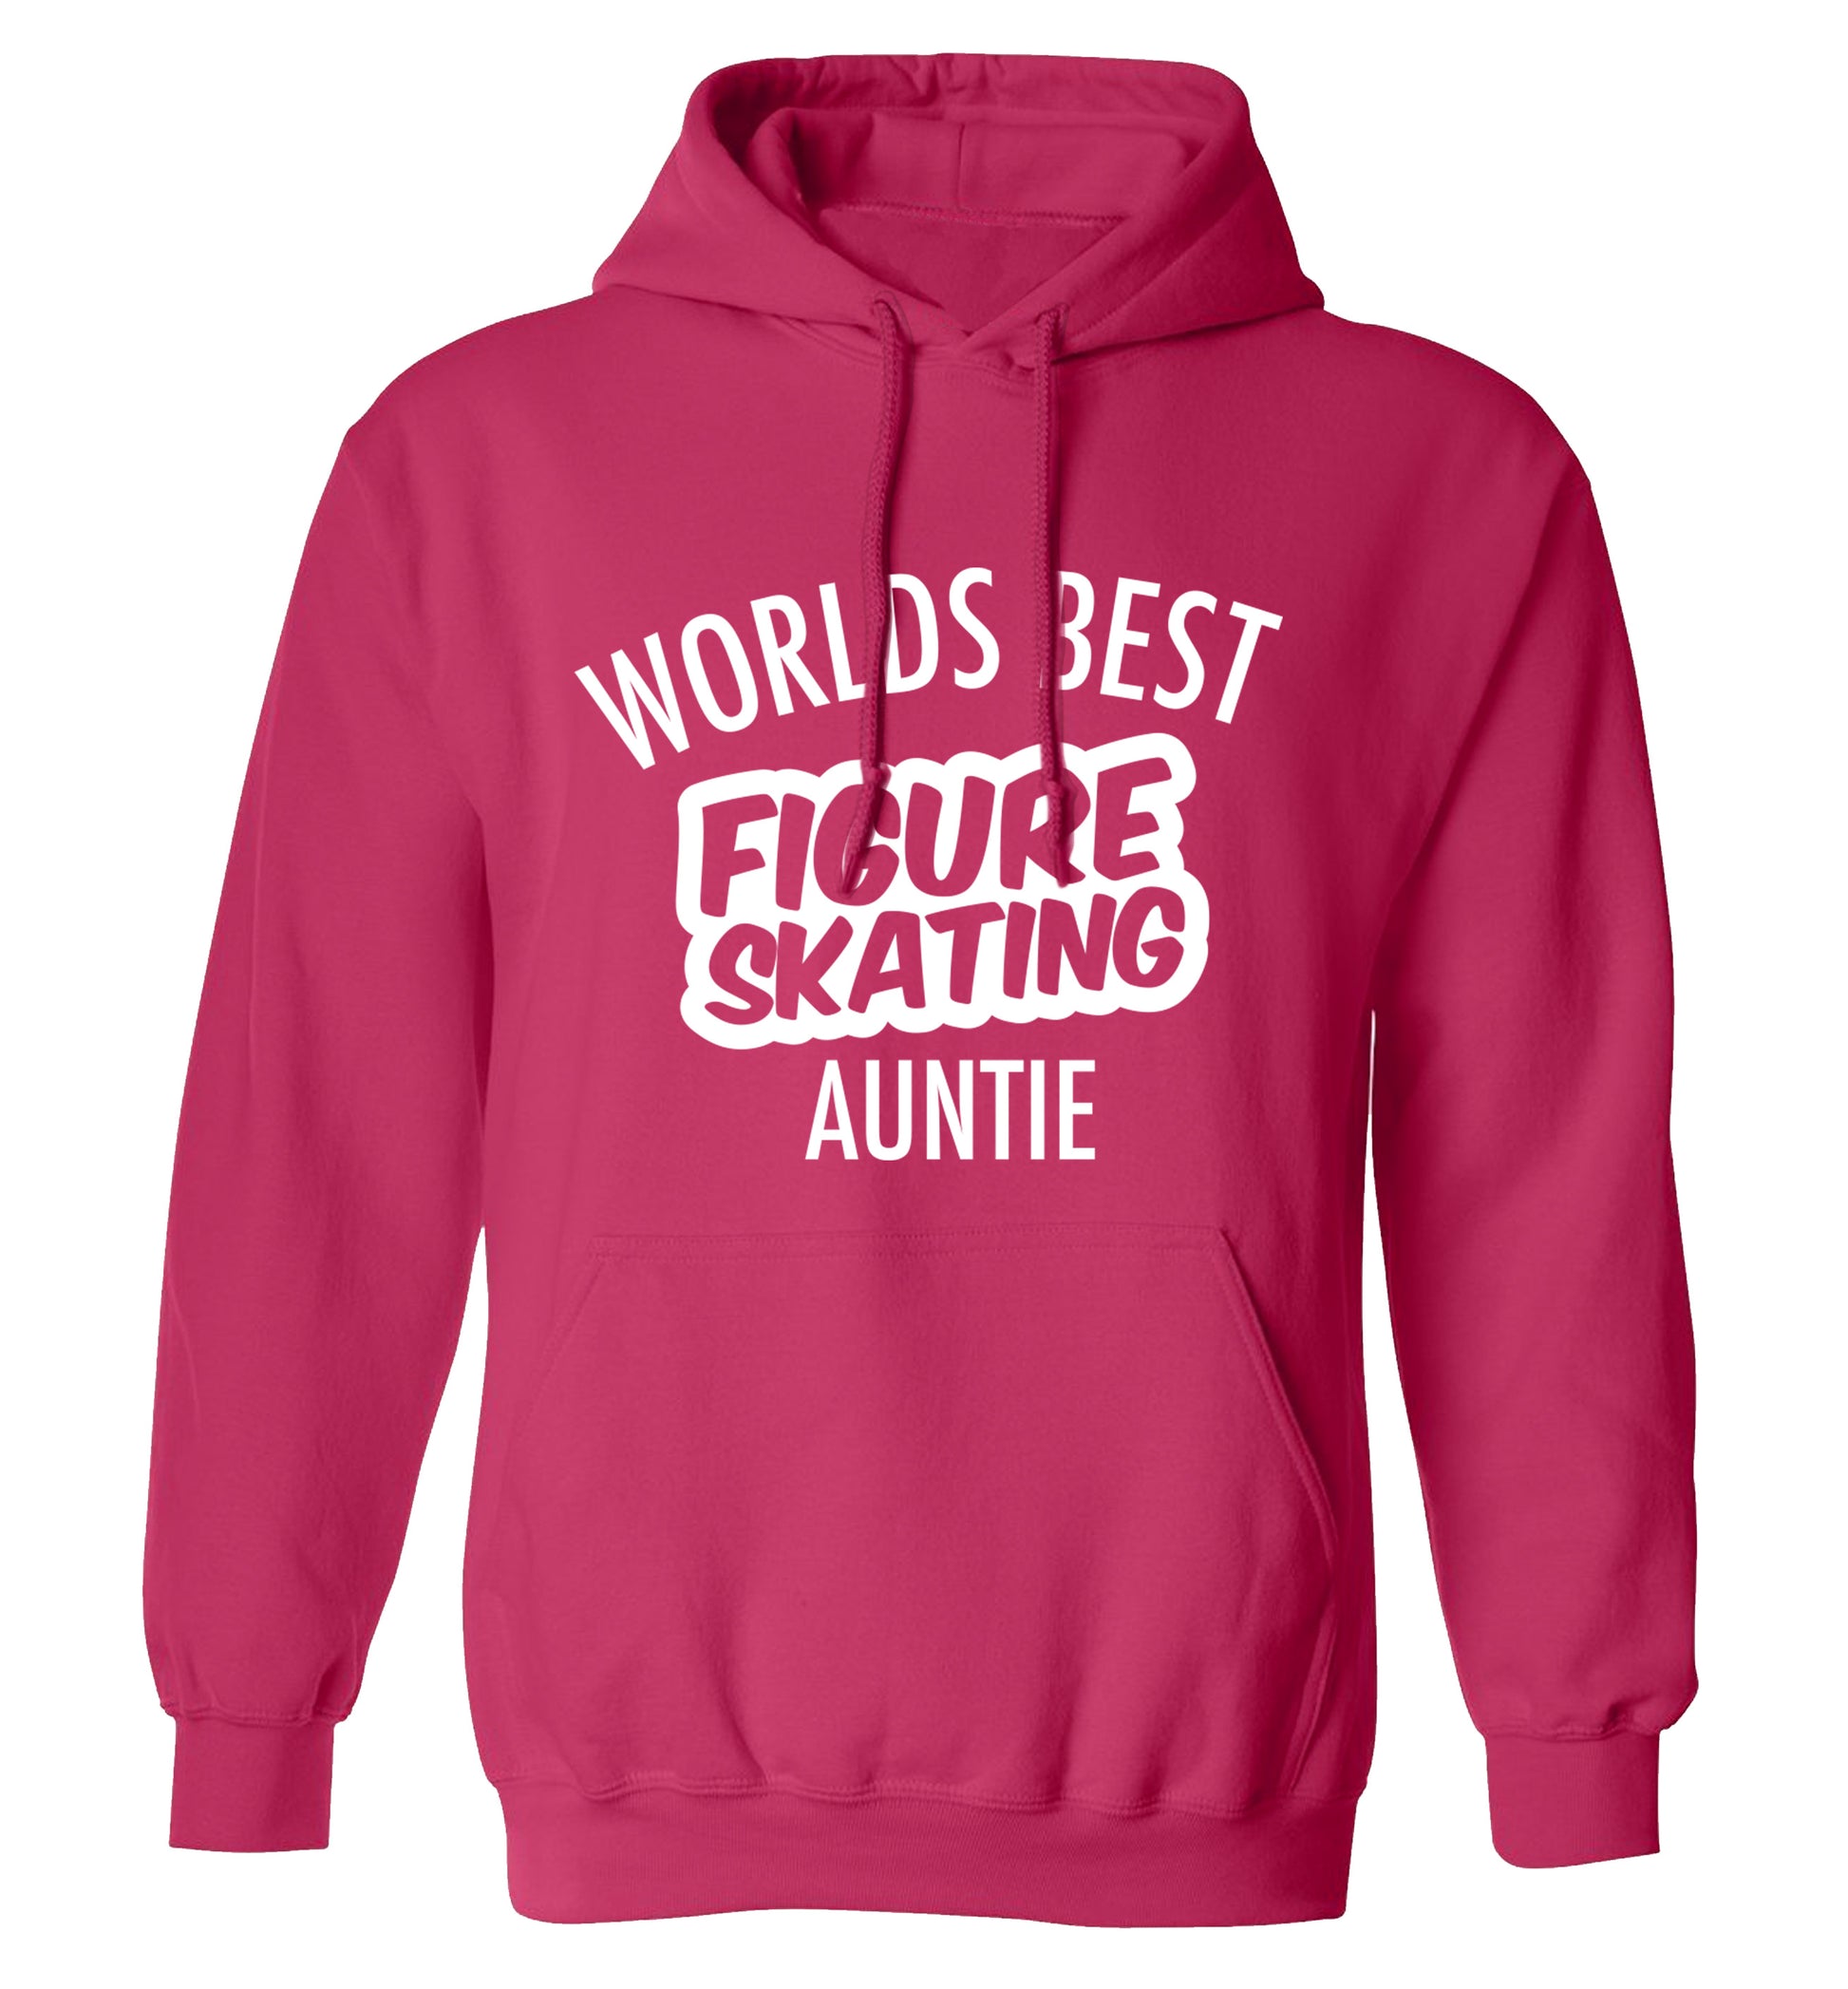 Worlds best figure skating auntie adults unisexpink hoodie 2XL